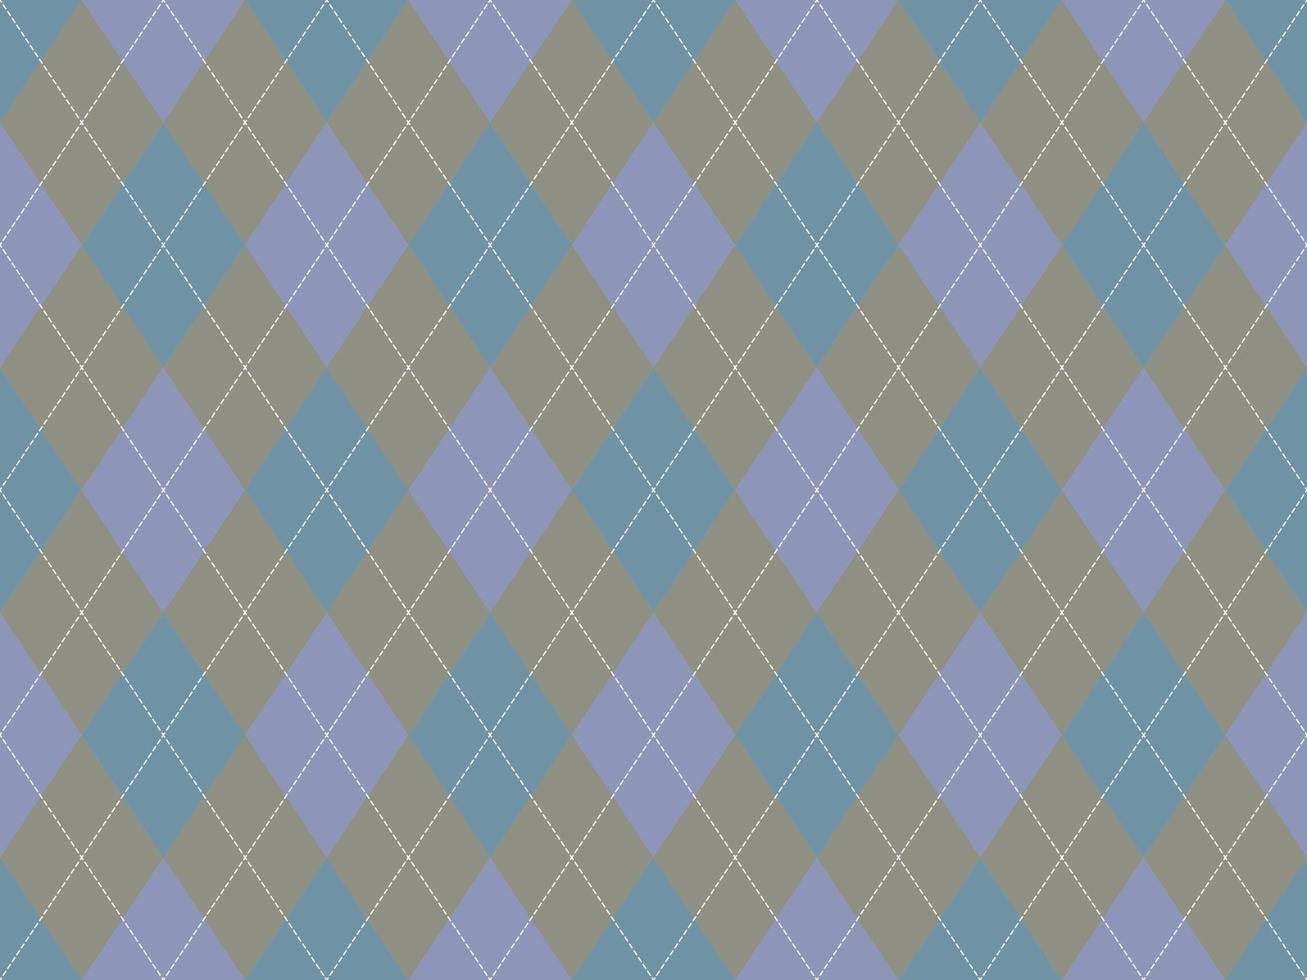 Argyle pattern seamless. Fabric texture background. Classic argill vector ornament